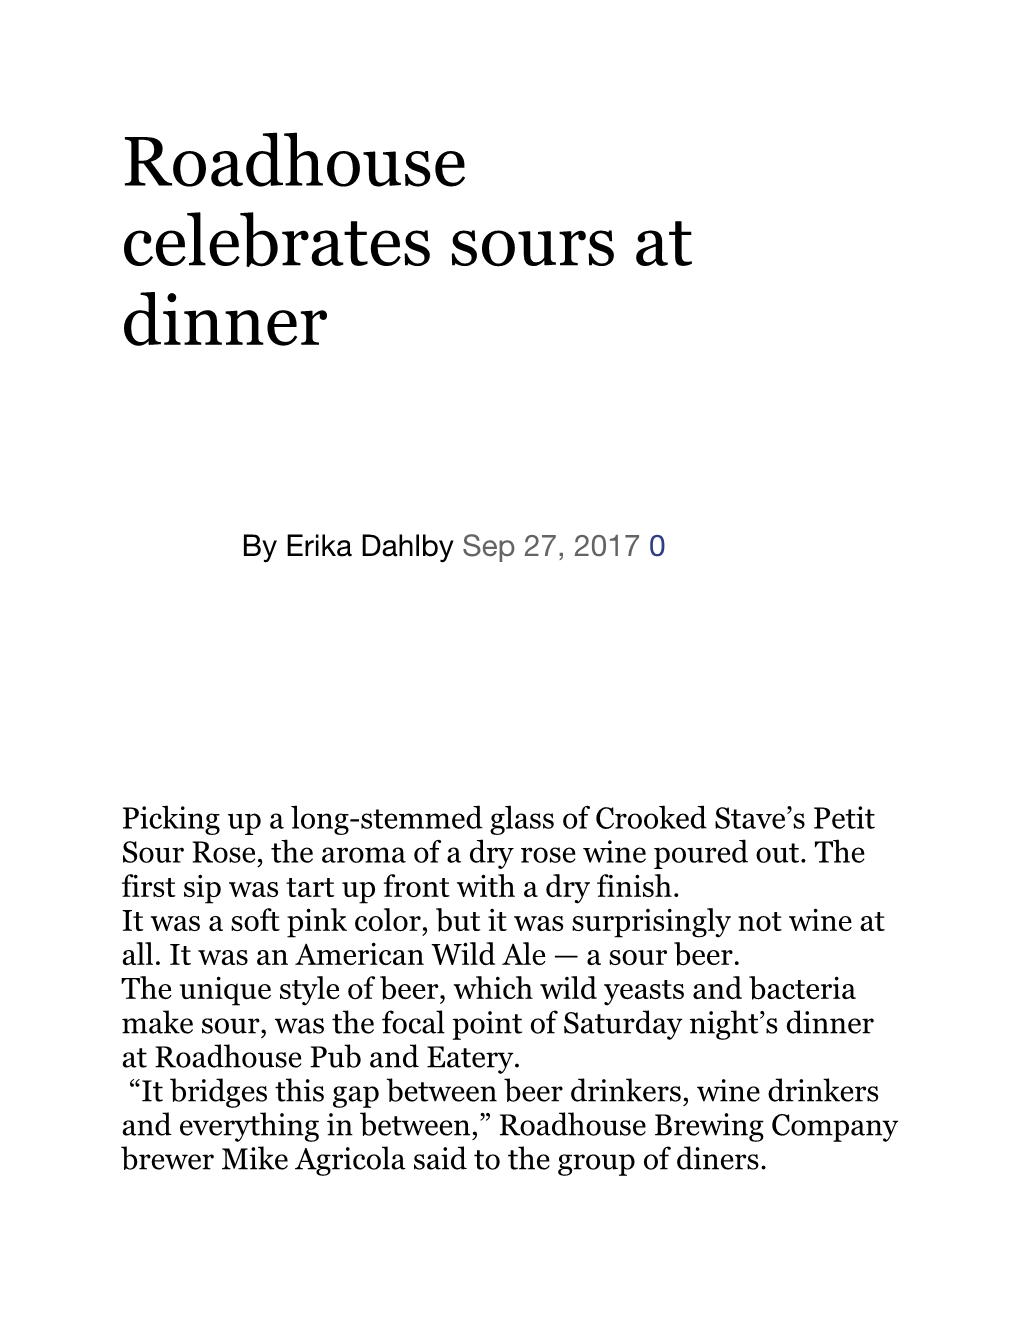 Roadhouse Celebrates Sours at Dinner